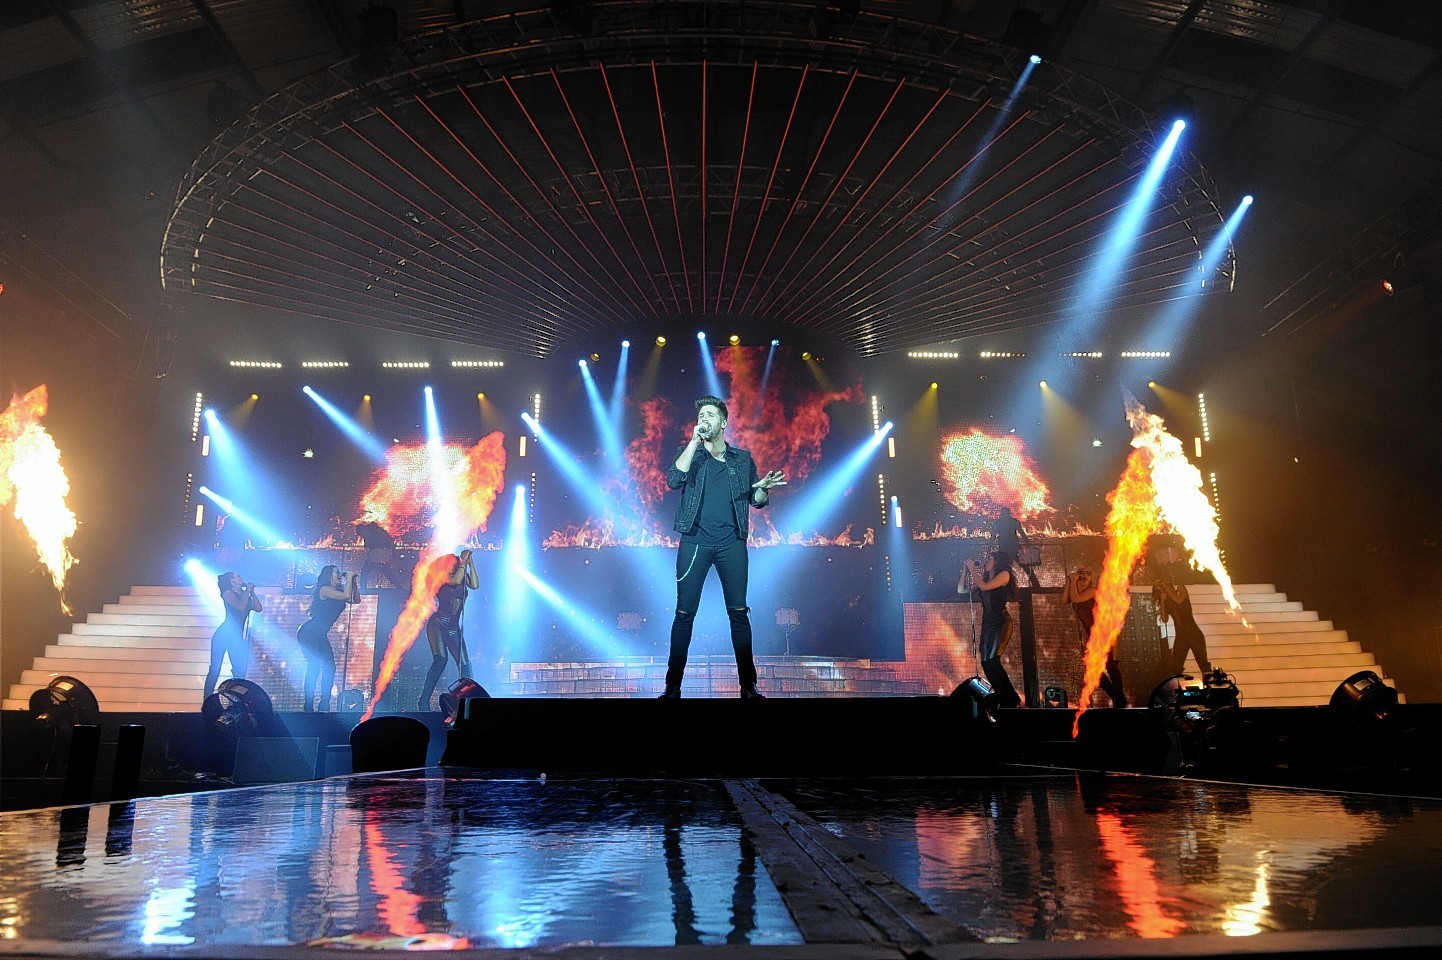 X-Factor winner Ben Haenow wowed the Aberdeen crowds